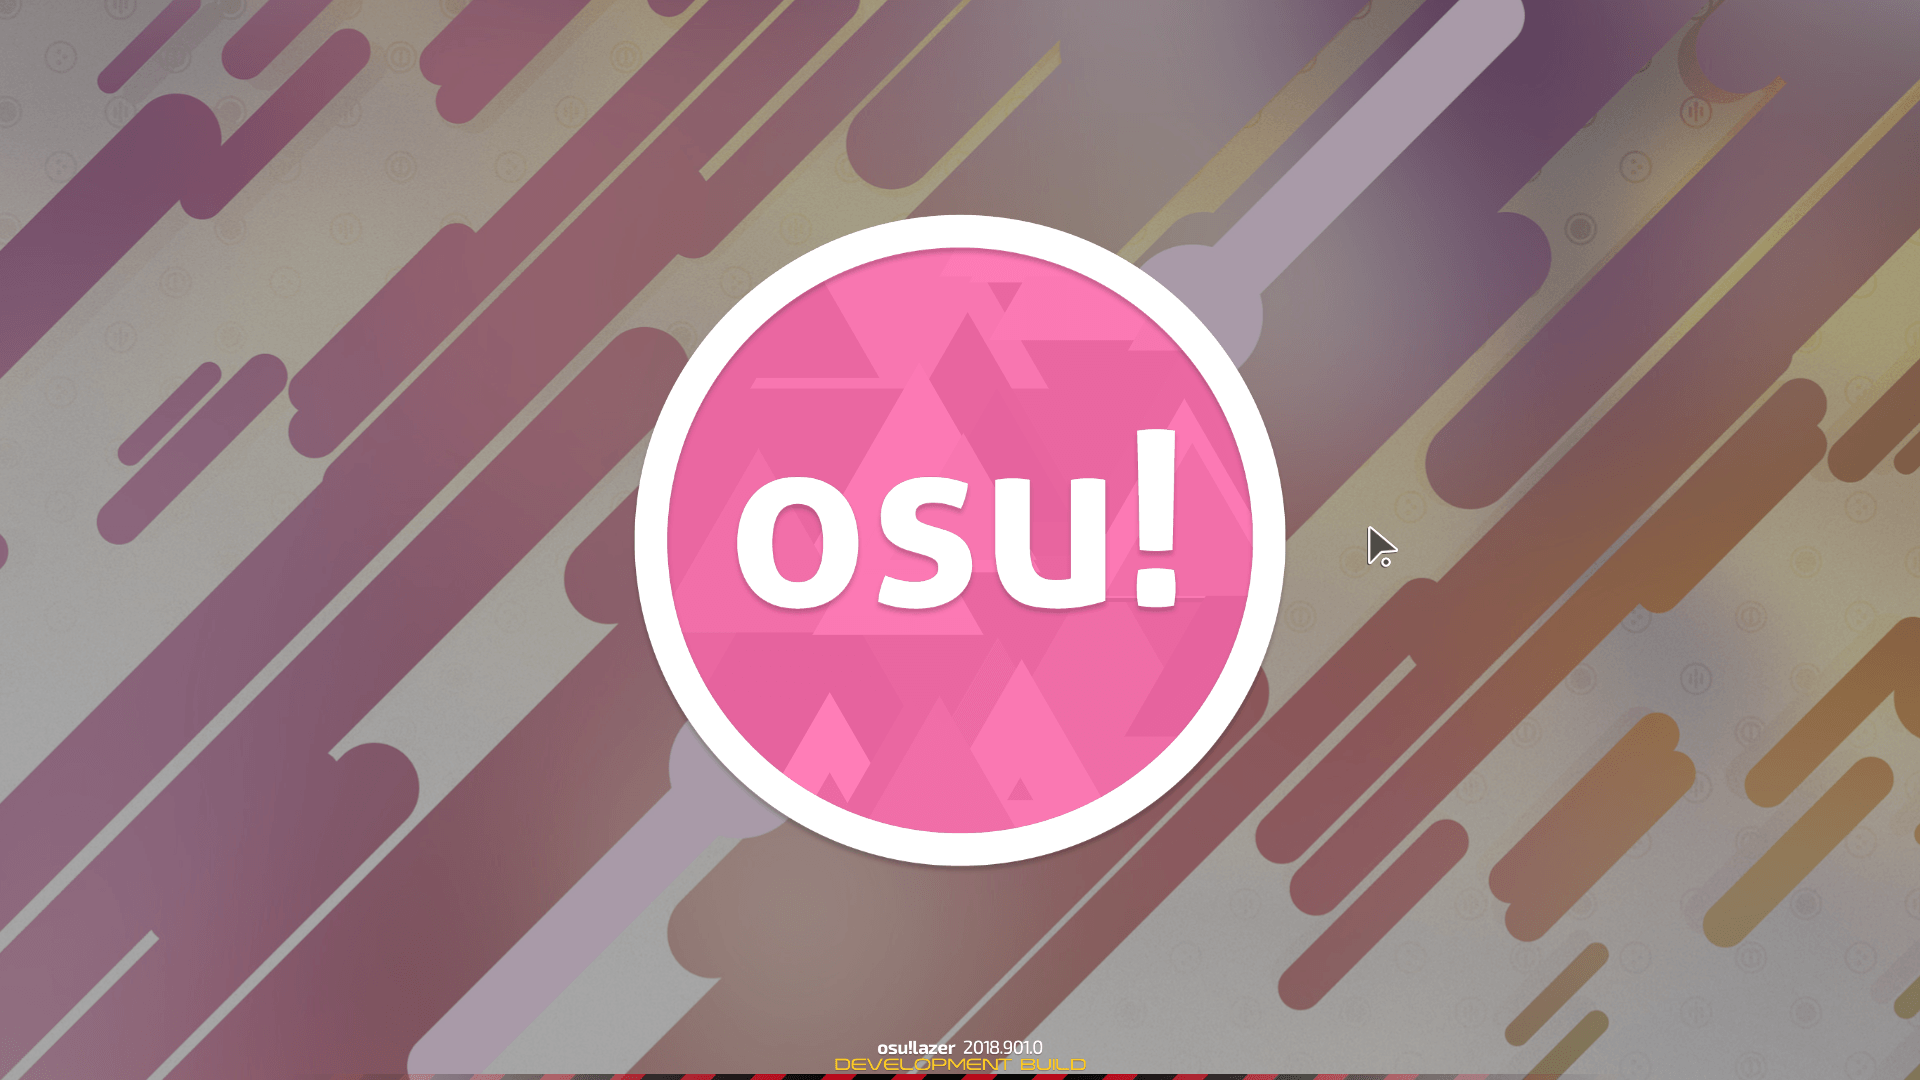 OSU Logo - Return To Large Logo After Idle Period · Issue · Ppy Osu · GitHub